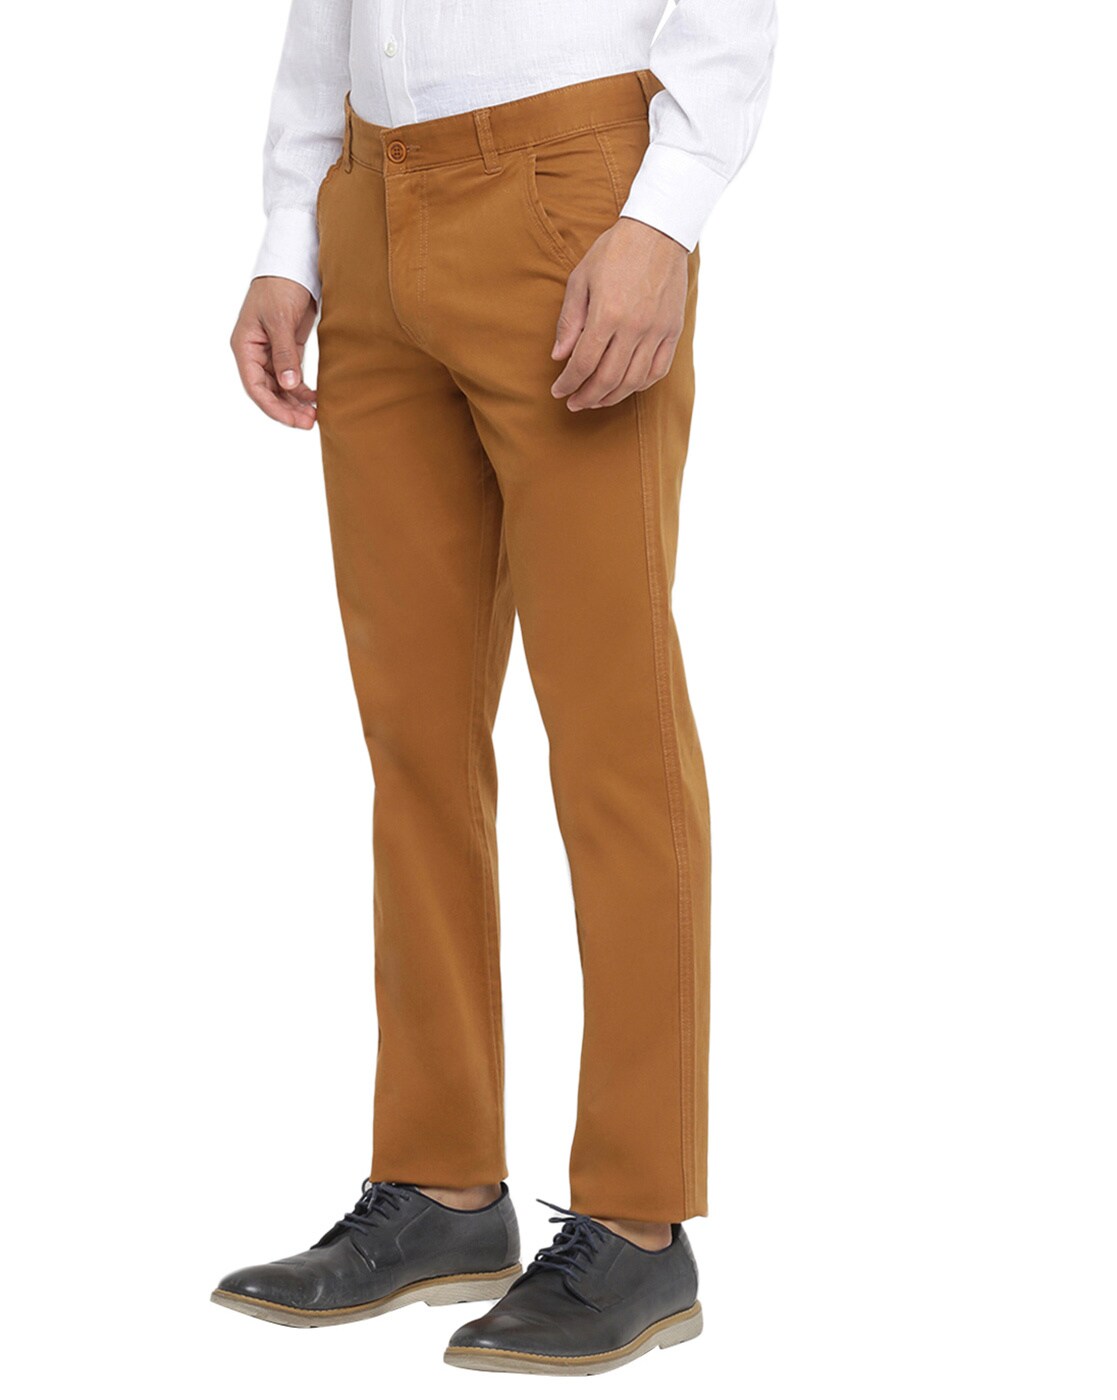 Buy Fabindia Men Trousers online in India